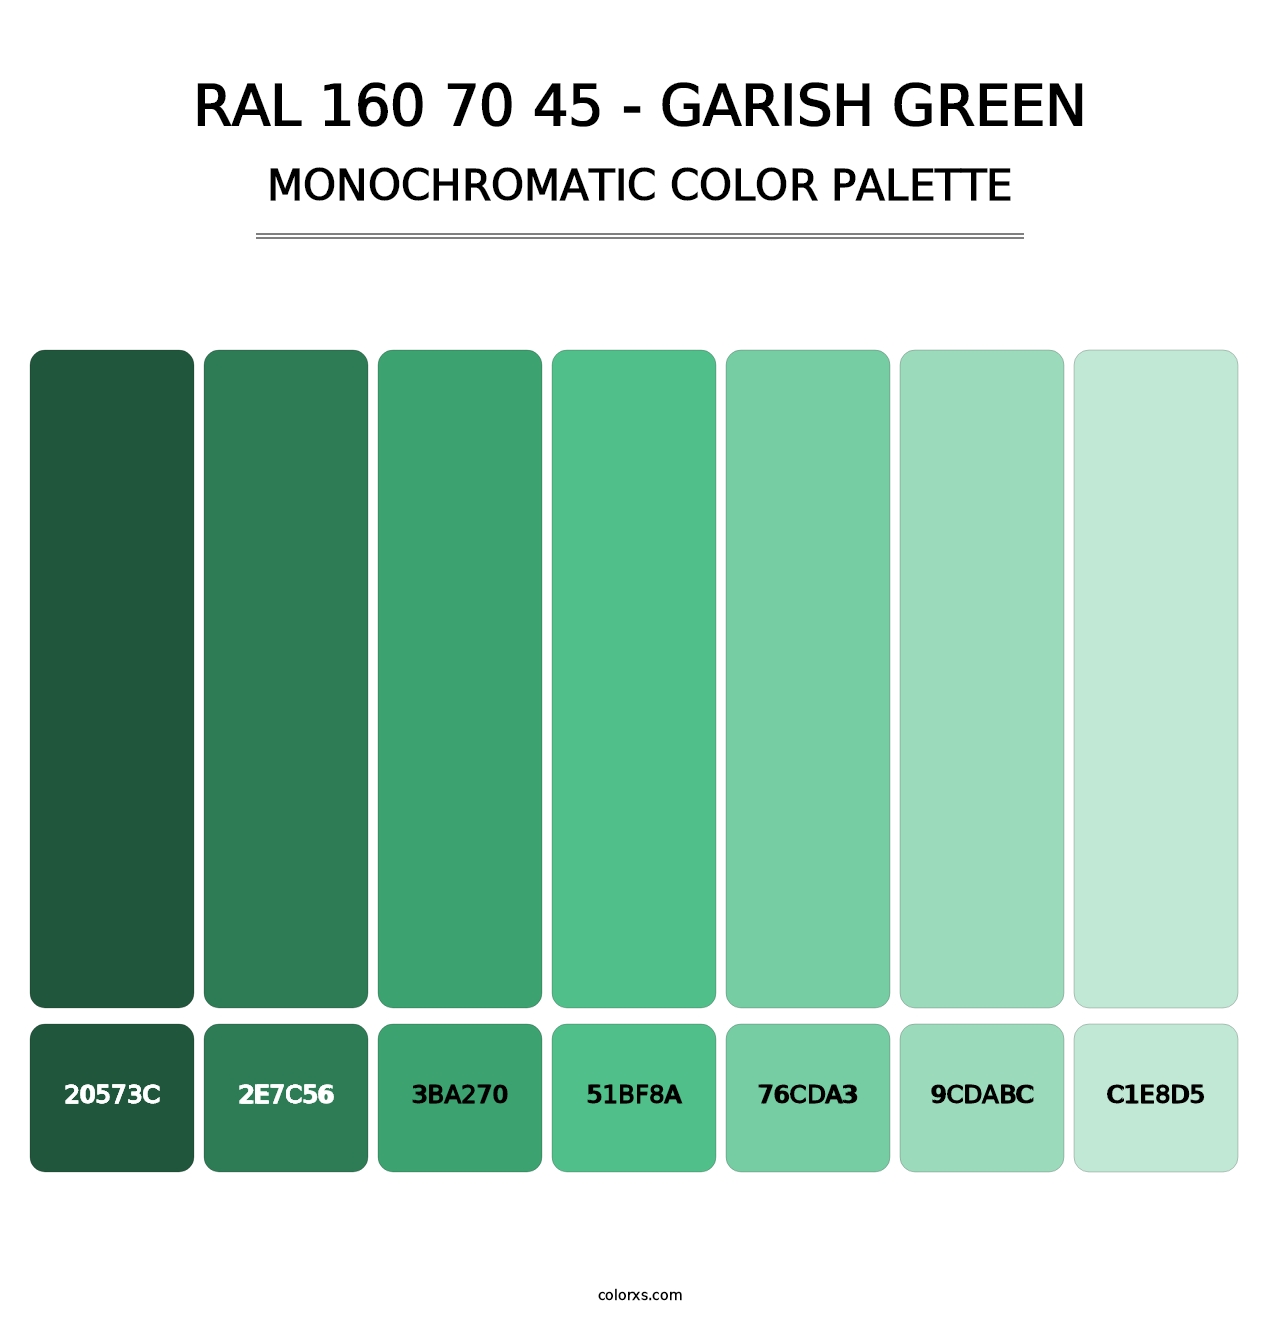 RAL 160 70 45 - Garish Green - Monochromatic Color Palette